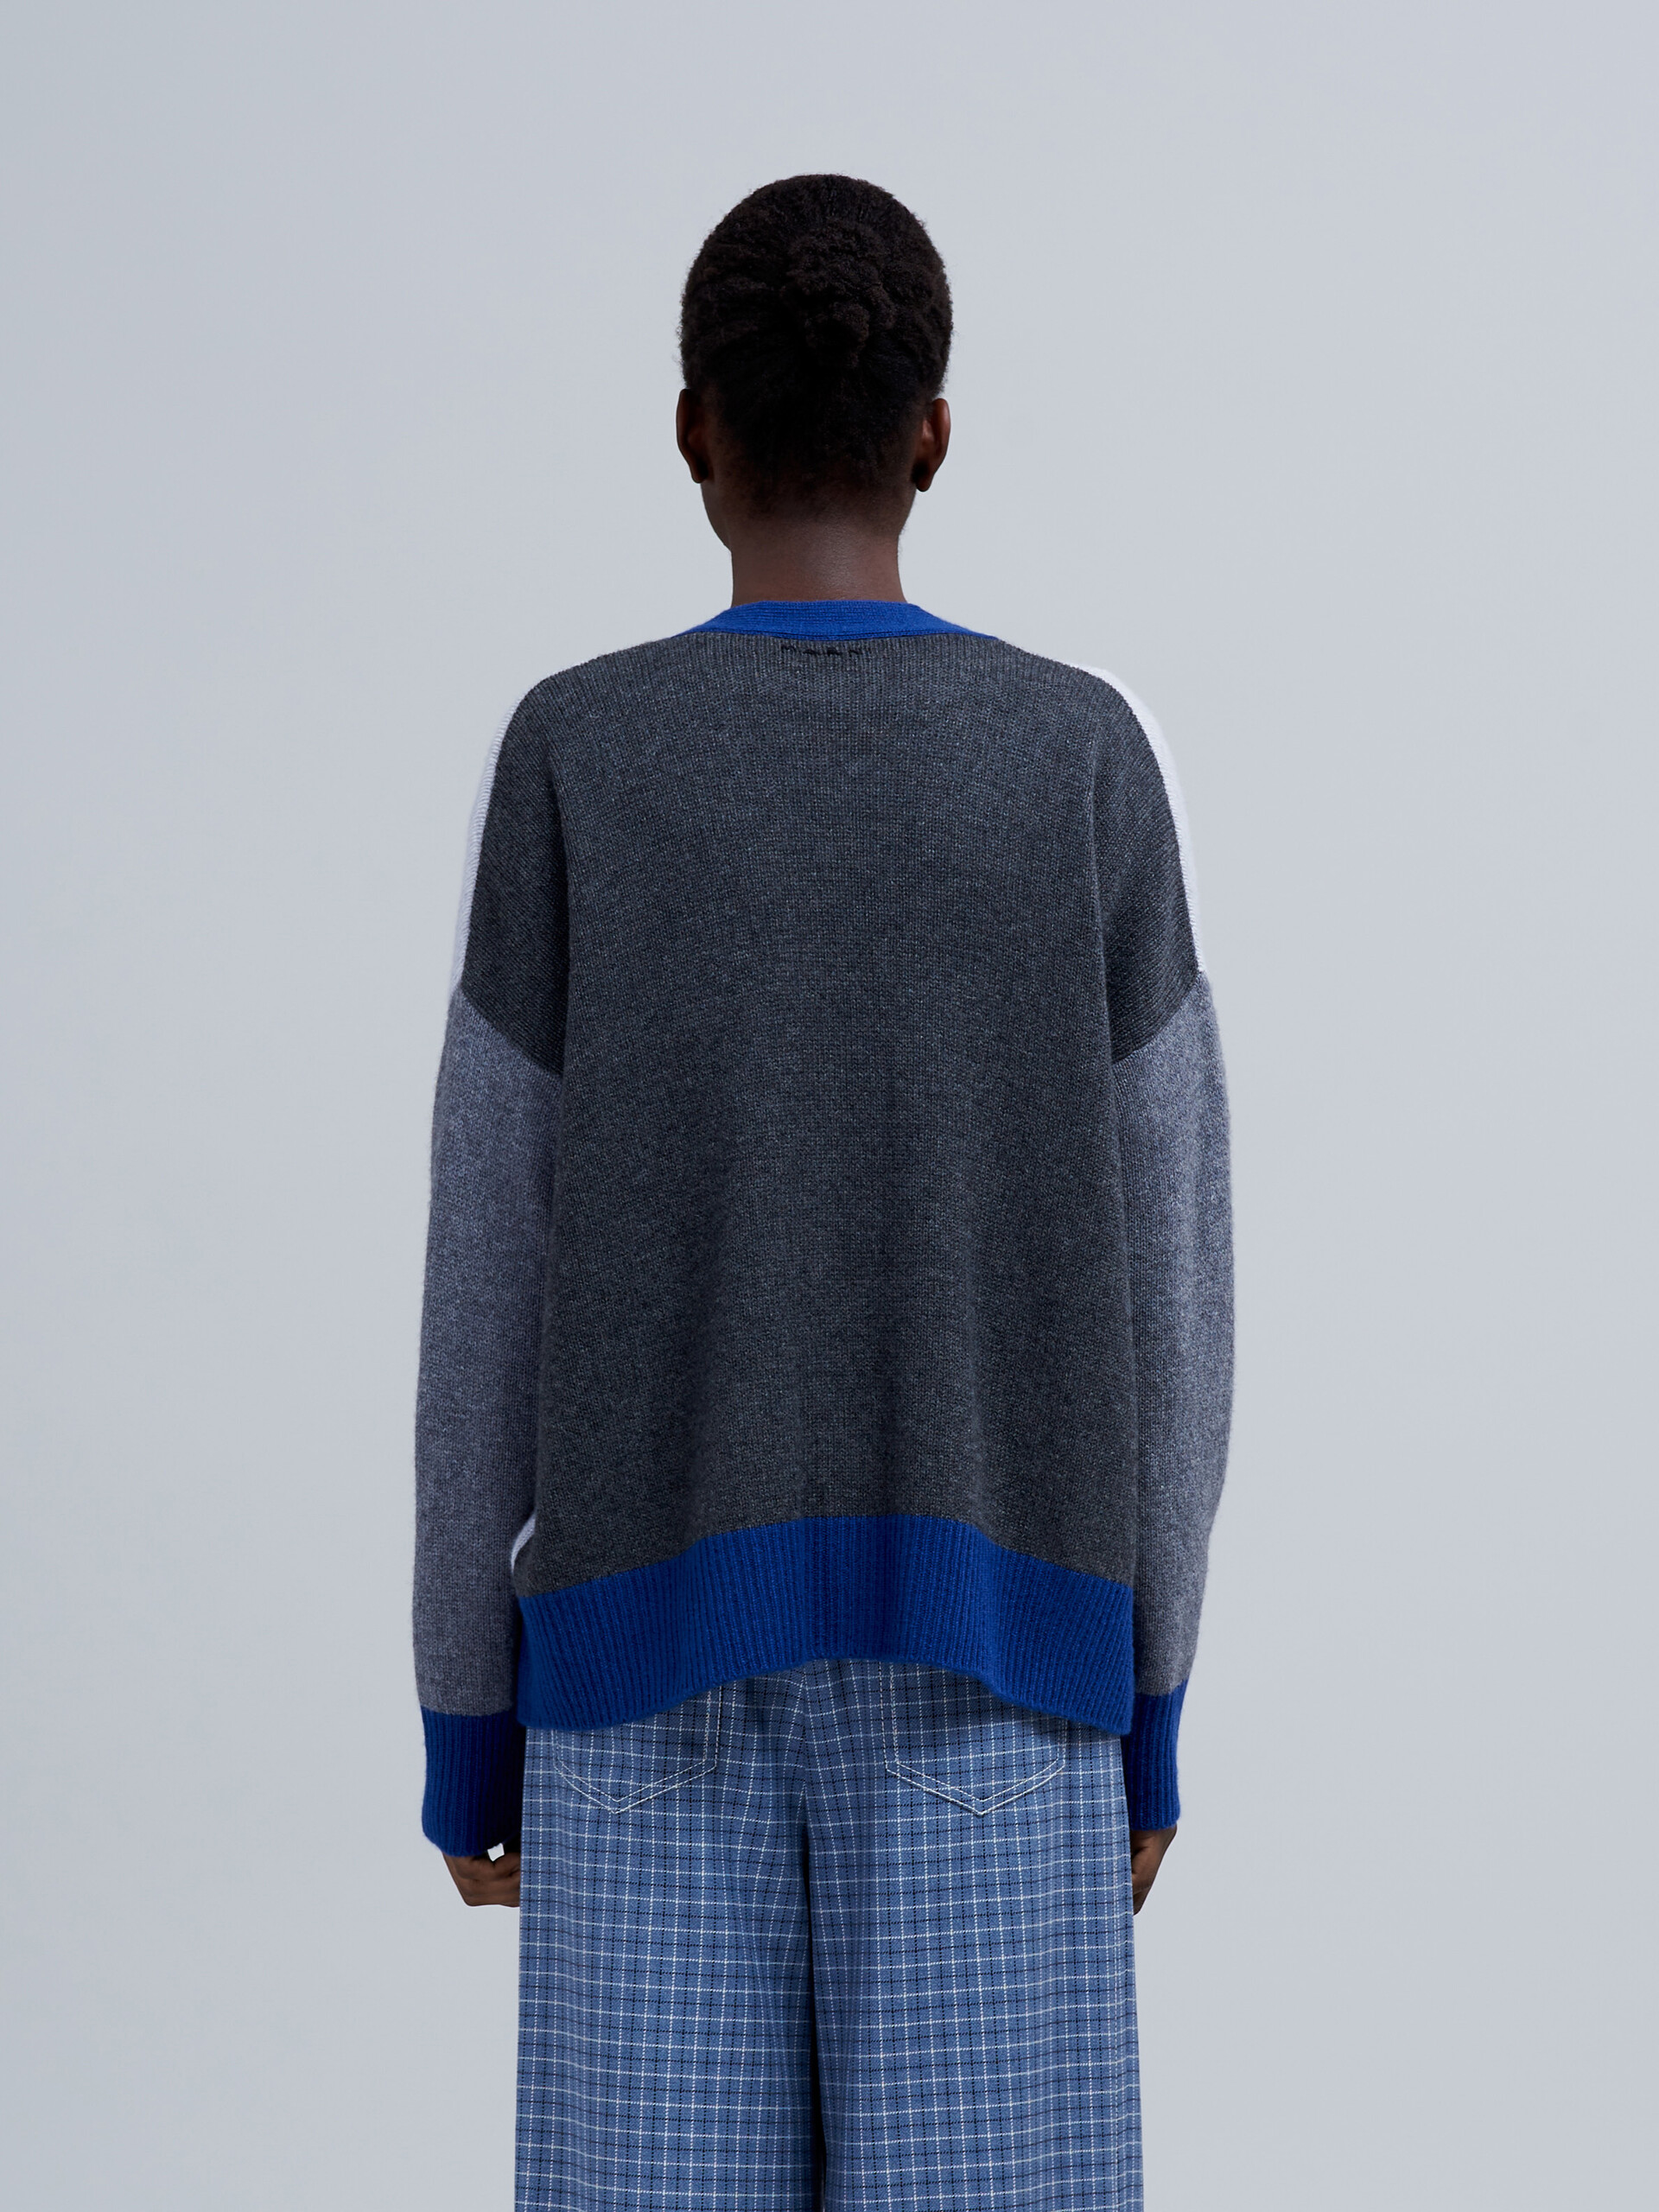 Iconic cashmere colourblock cardigan - Pullovers - Image 3